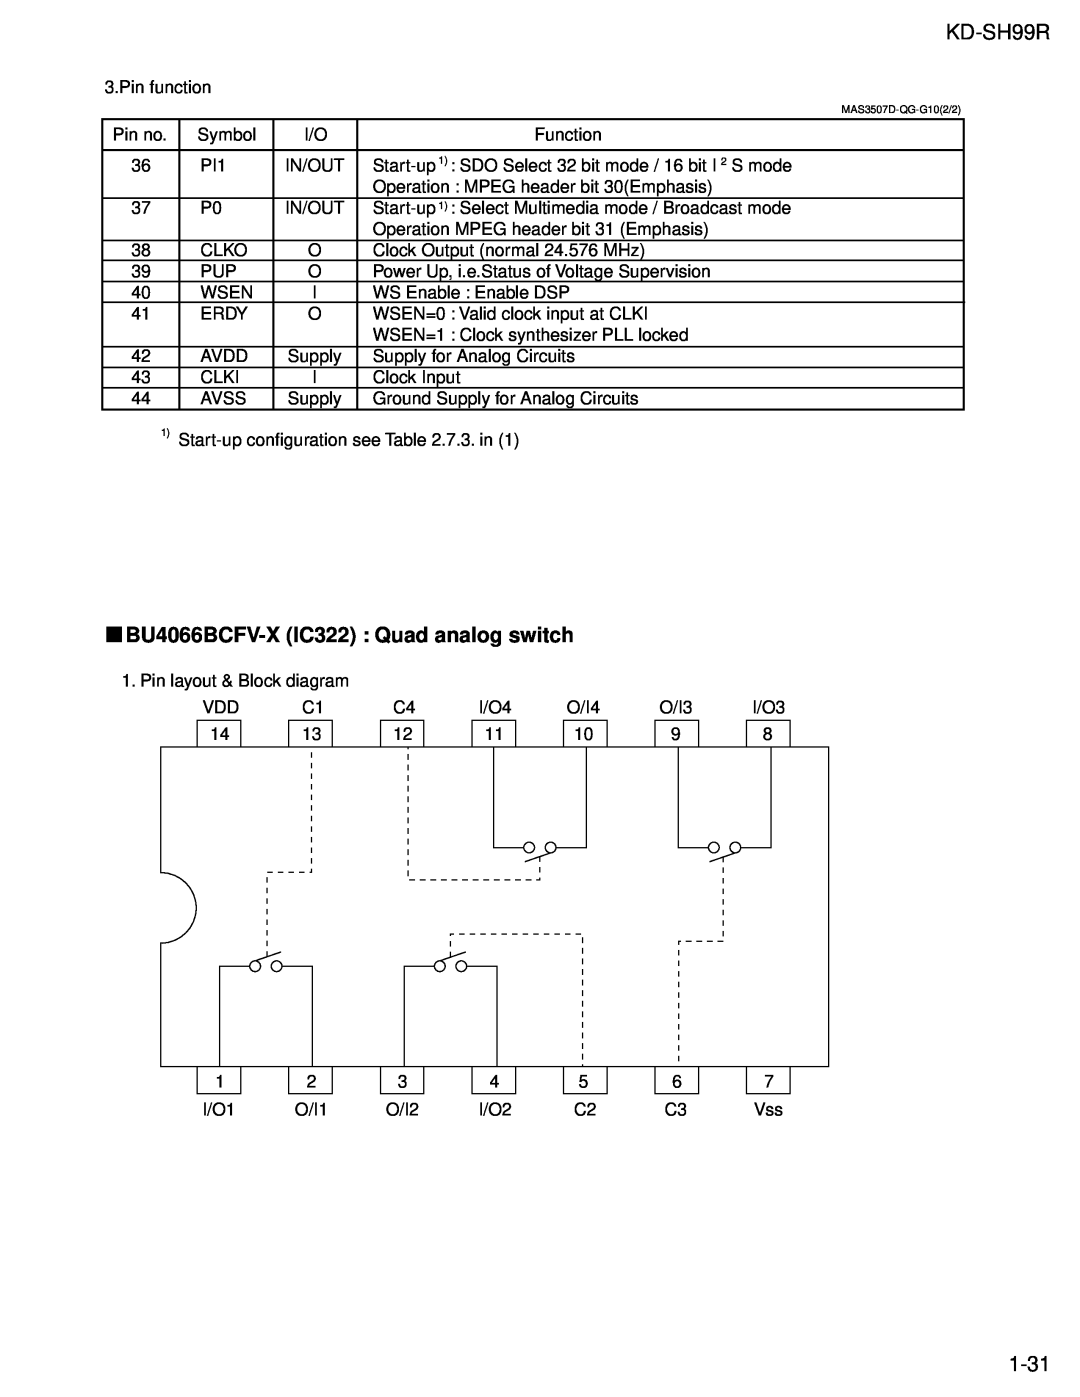 JVC KD-SH99R service manual BU4066BCFV-XIC322 Quad analog switch, 1-31 